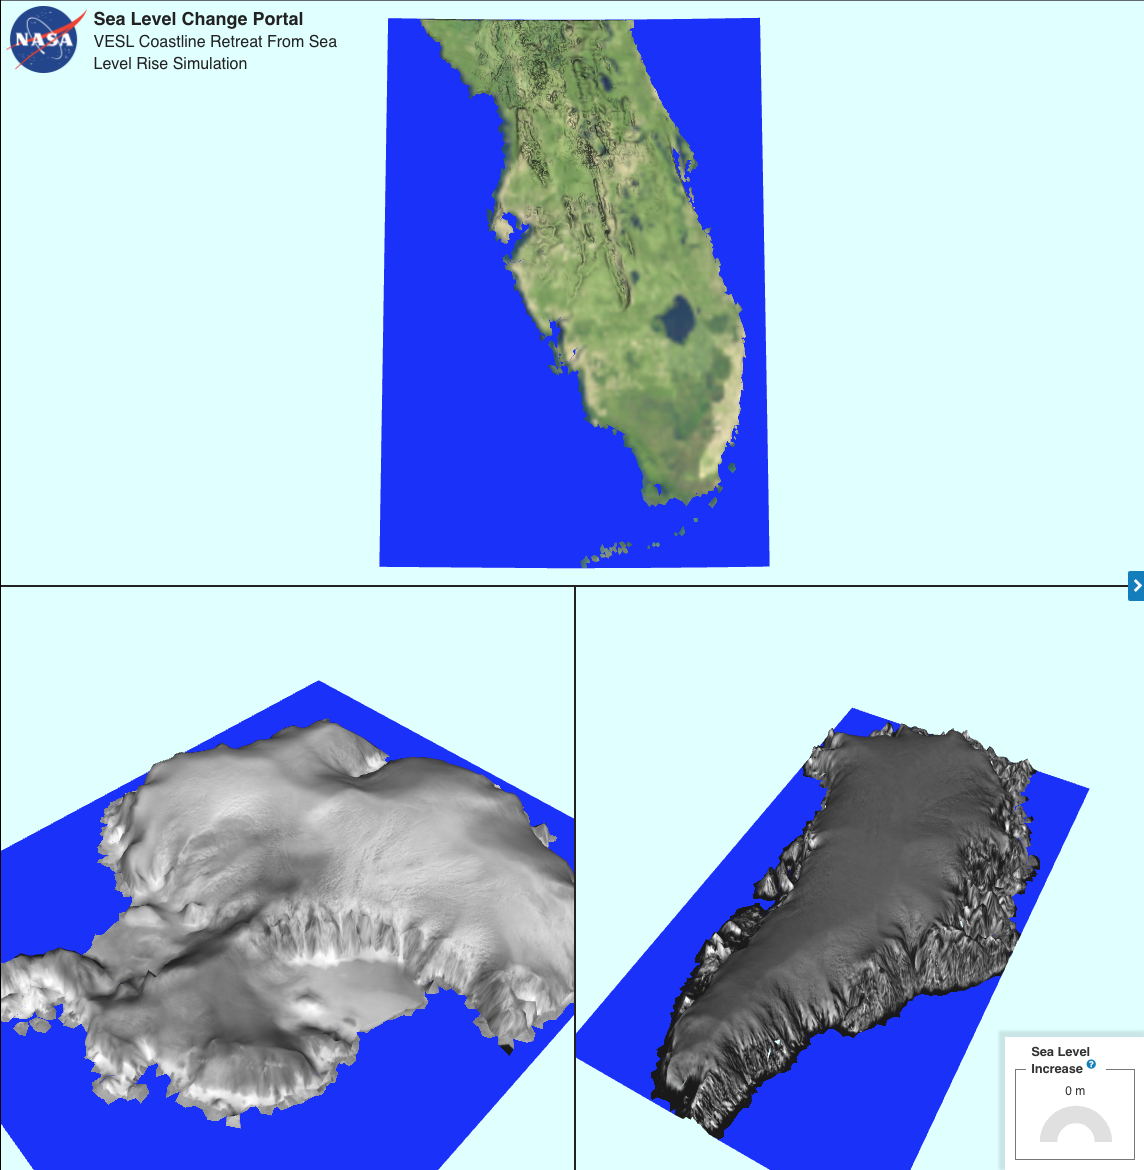  Sea Level Change Portal - Coastline Retreat From Sea Level Rise Simulation